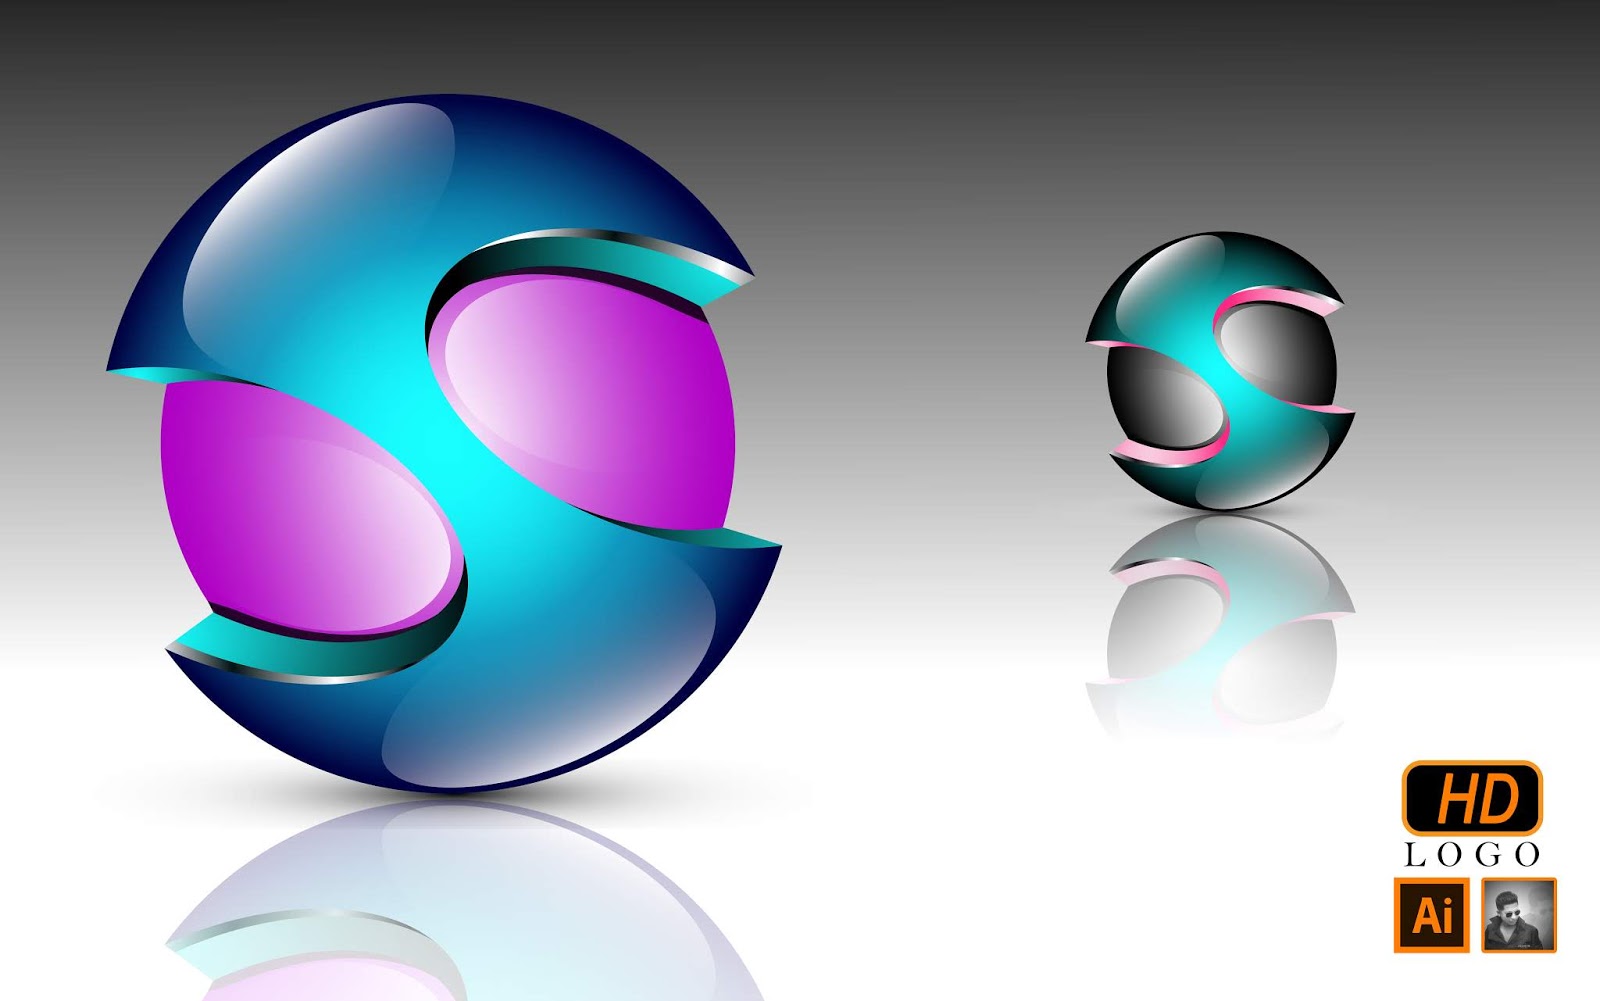 3D logo Image